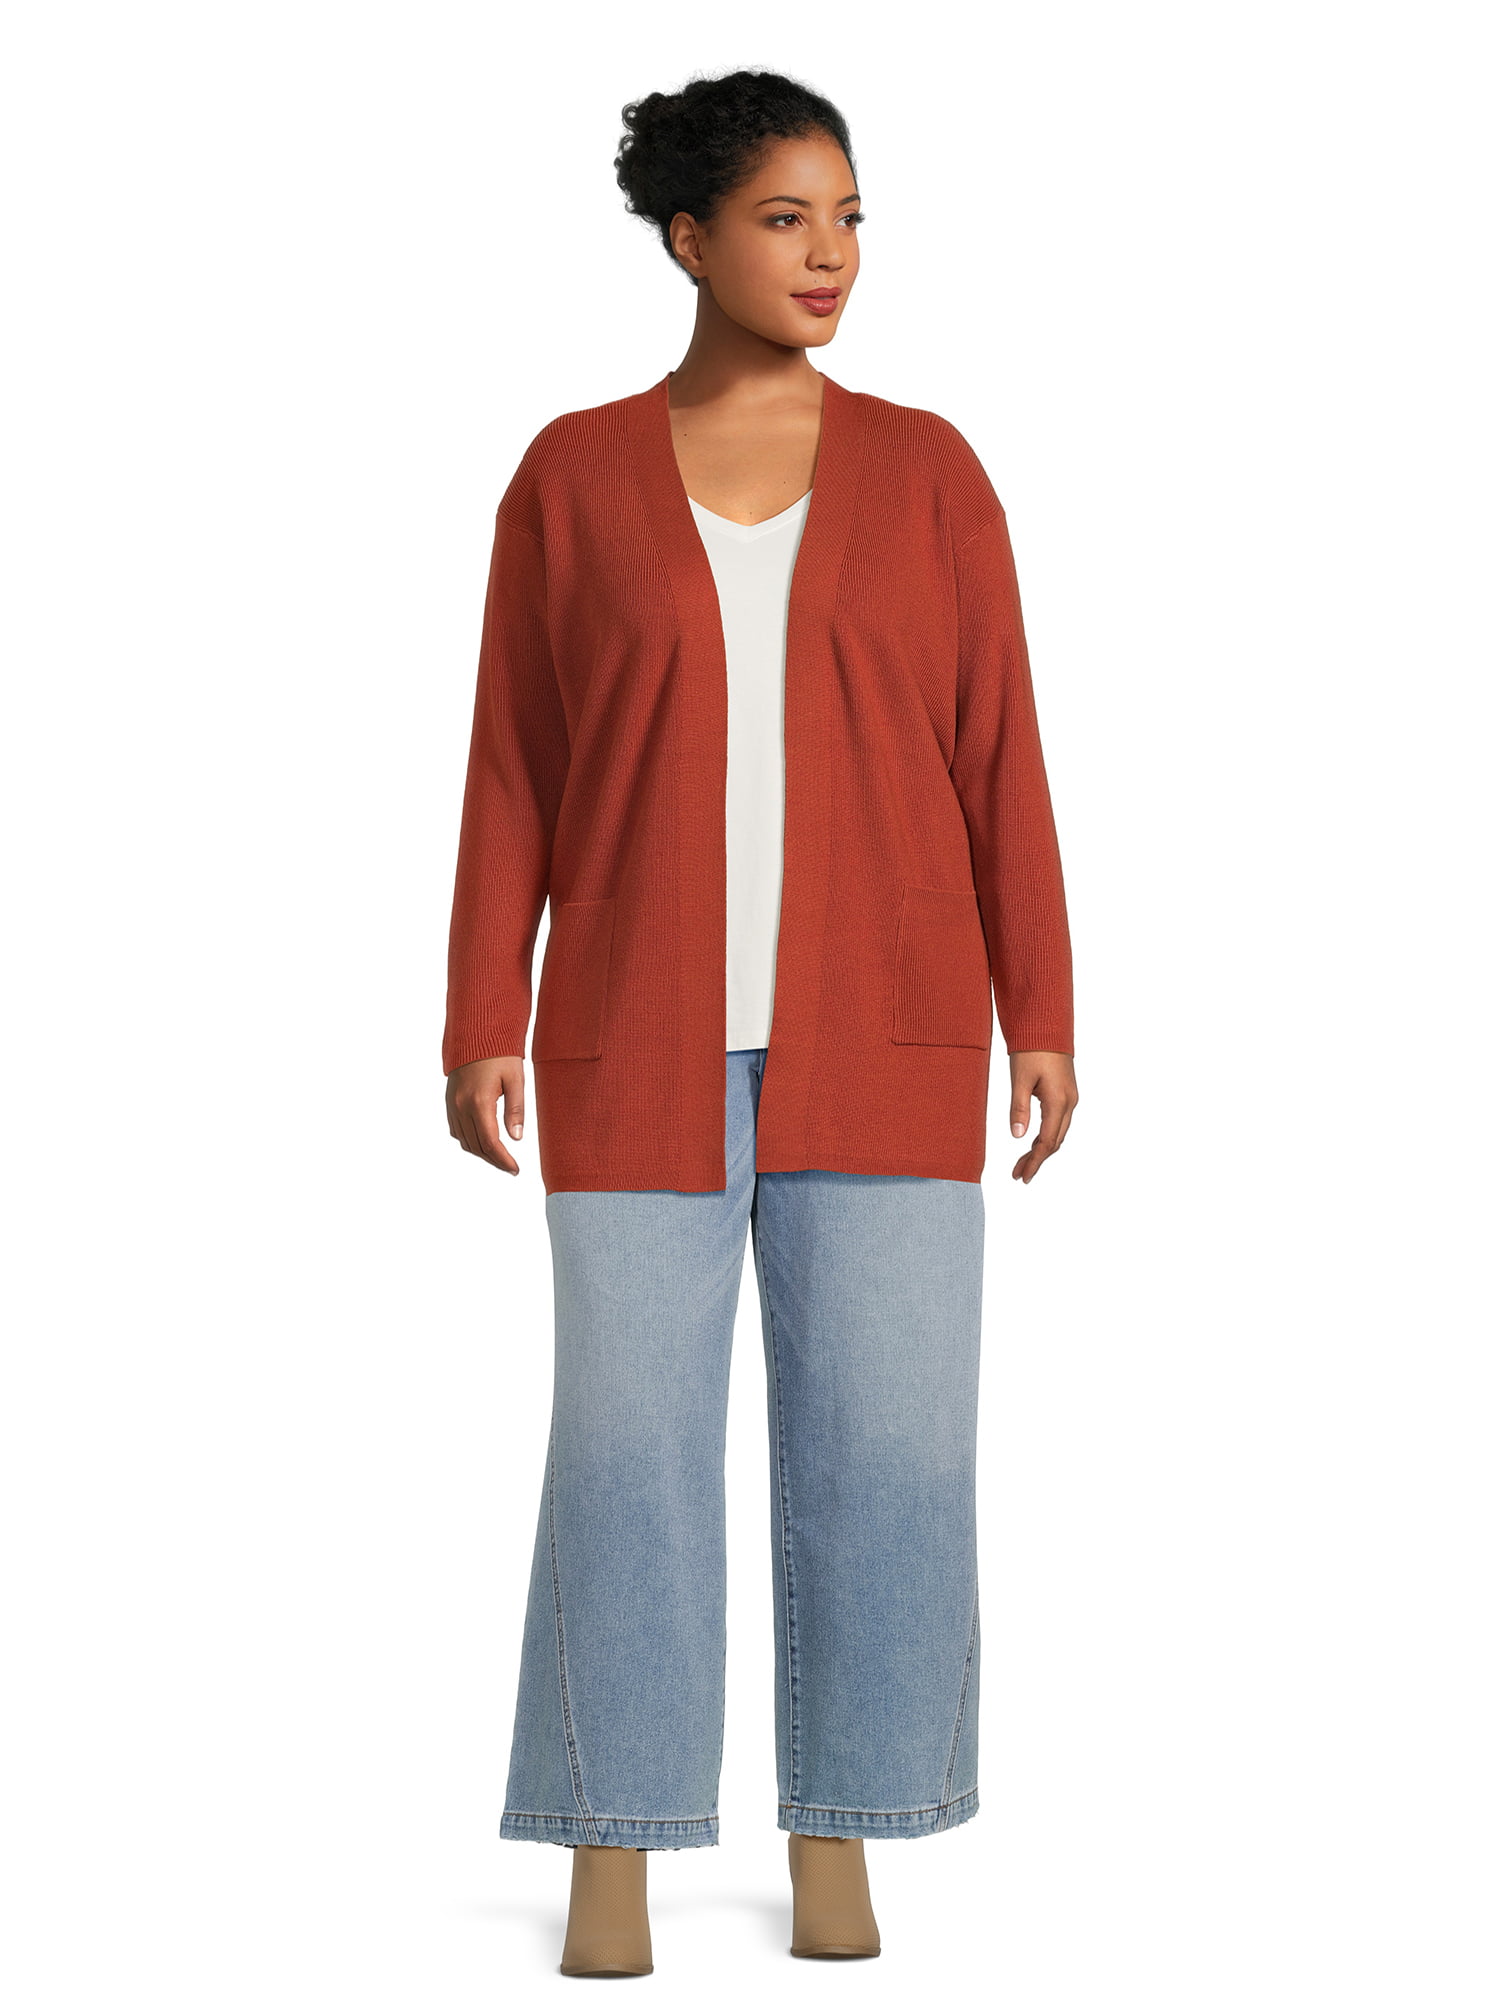 Woman's Plus Size Tops / Knit Open Cardigan / SWAK Designs